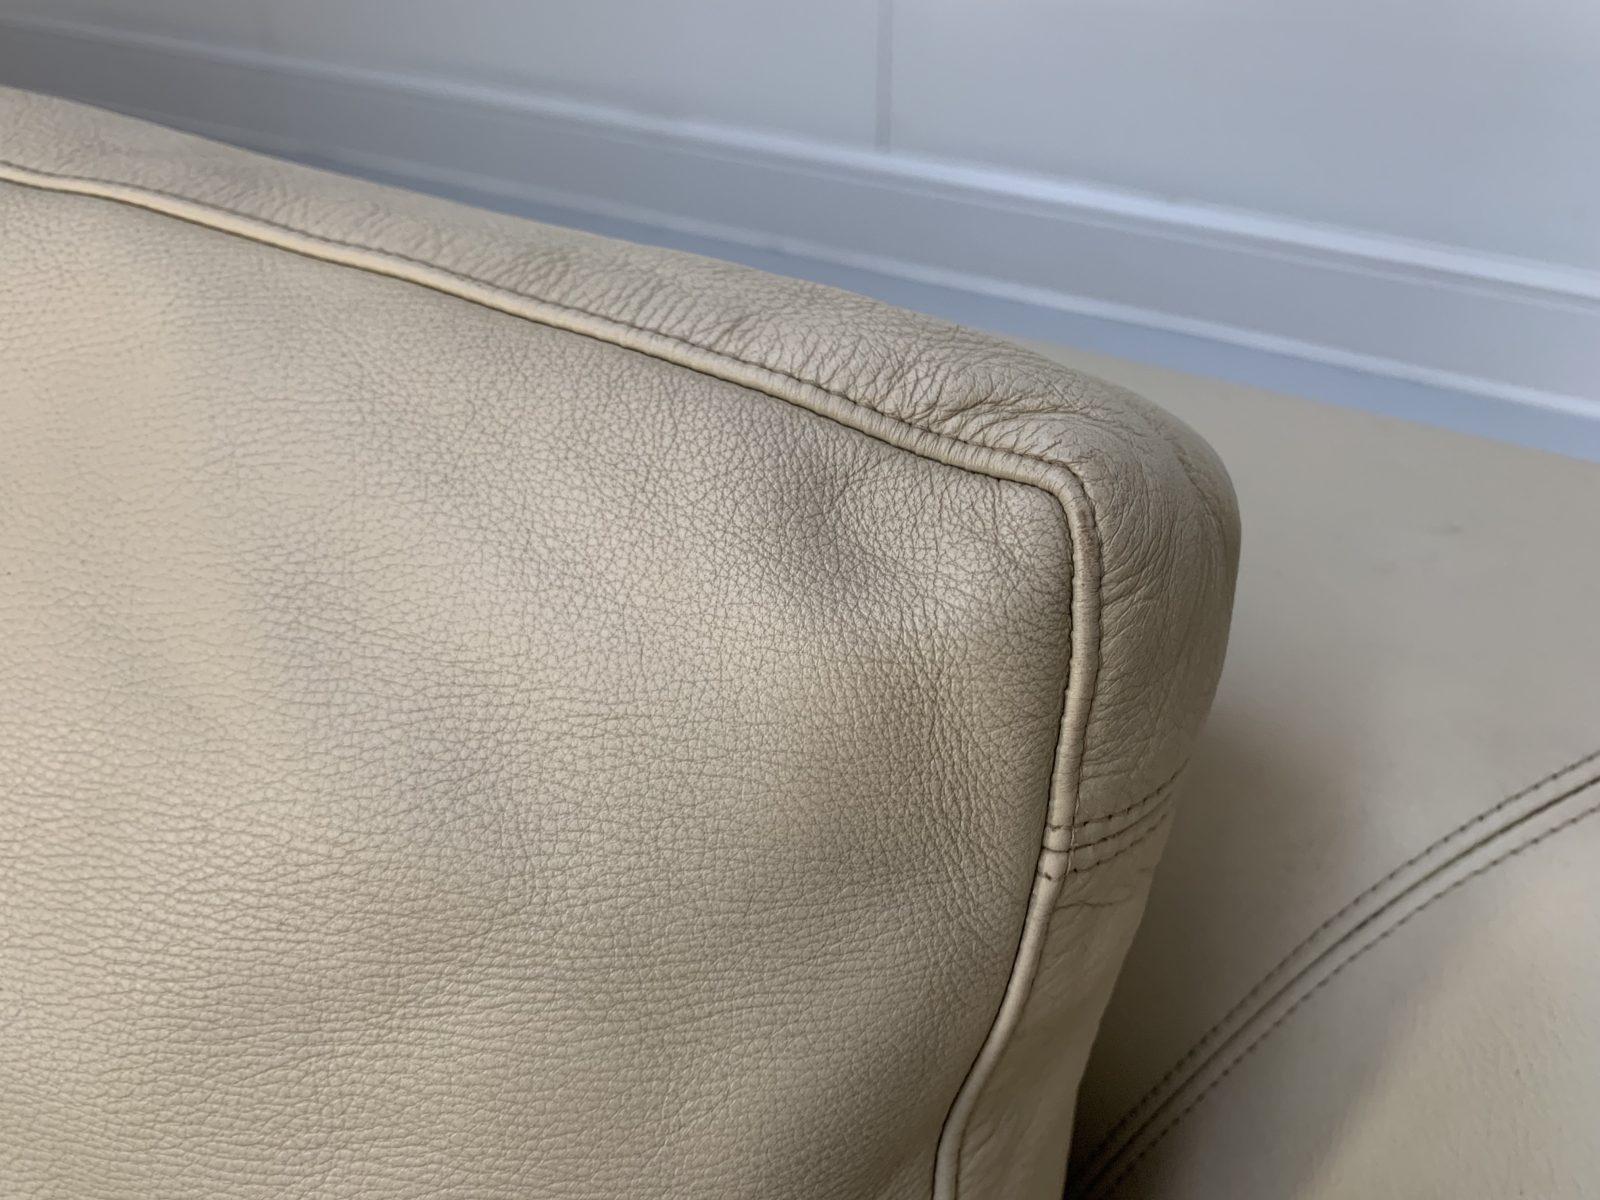 B&B Italia “Charles” L-Shape Sofa, In Cream “Koto” Leather For Sale 2